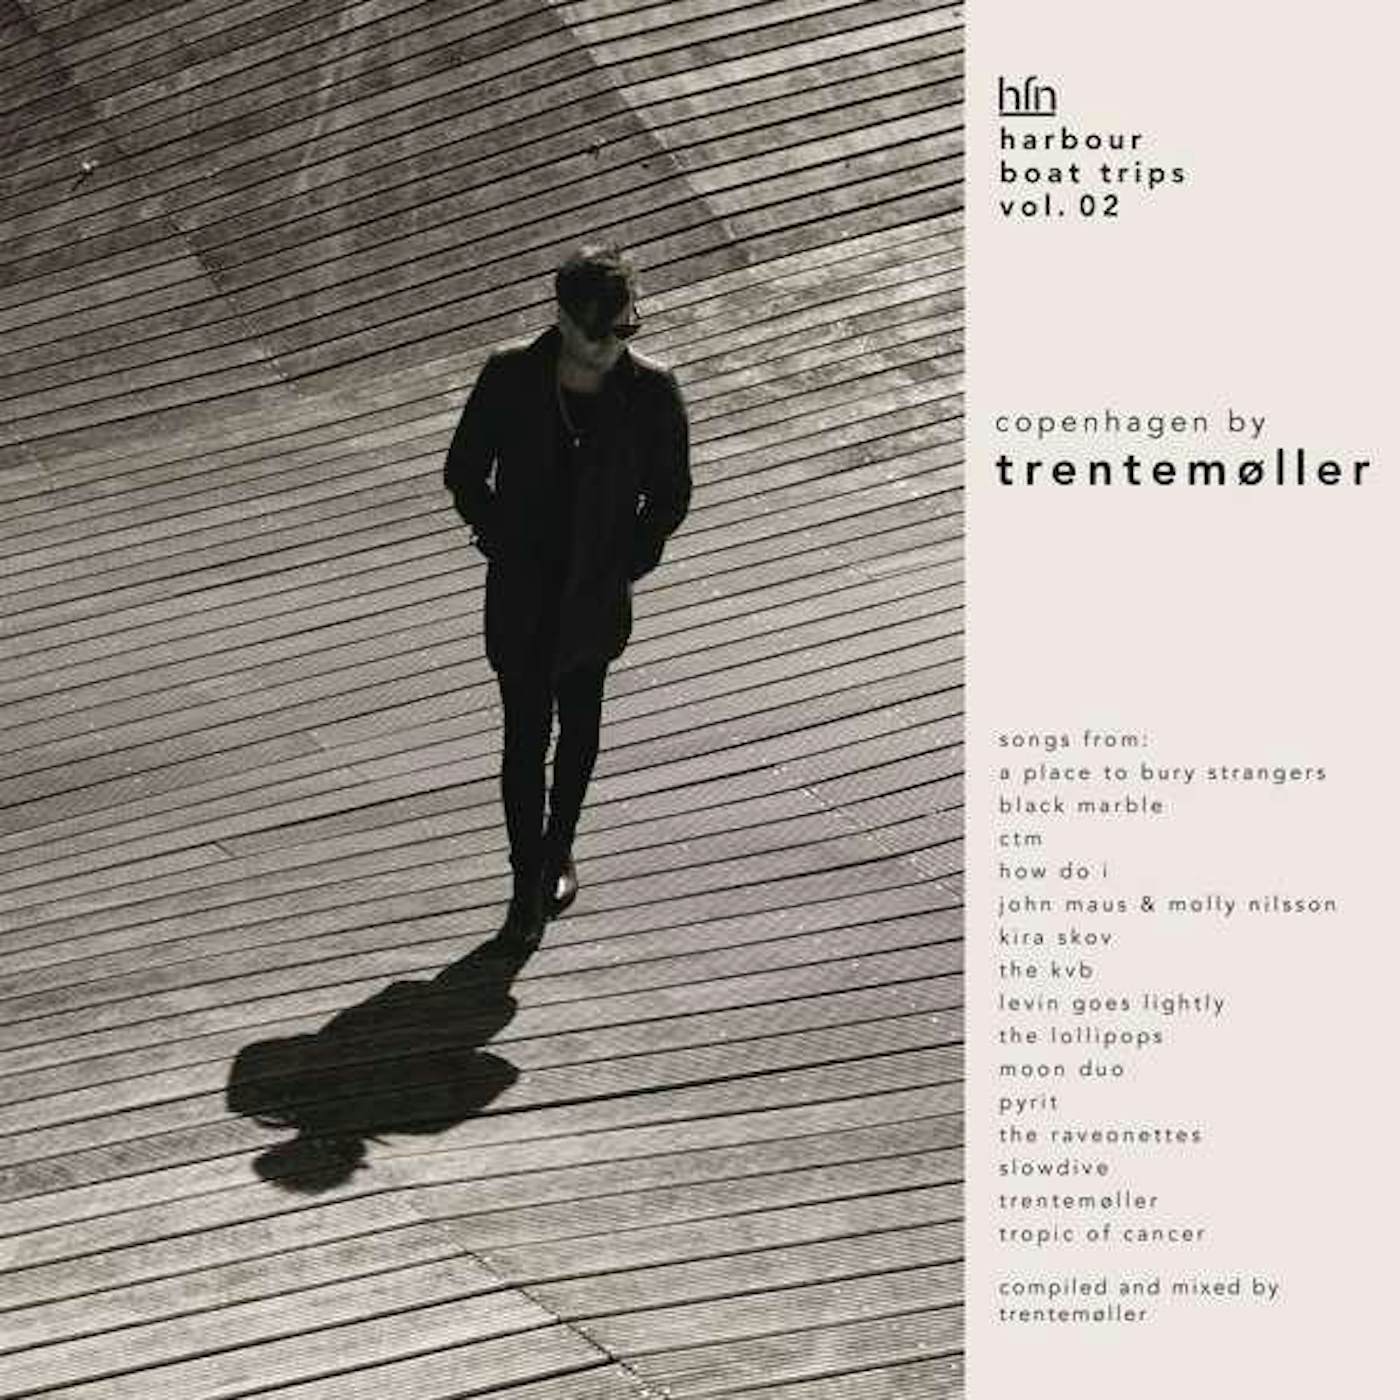 Trentemøller ‎/ Harbour Boat Trips Vol. 02 Copenhagen - 2LP Vinyl CD